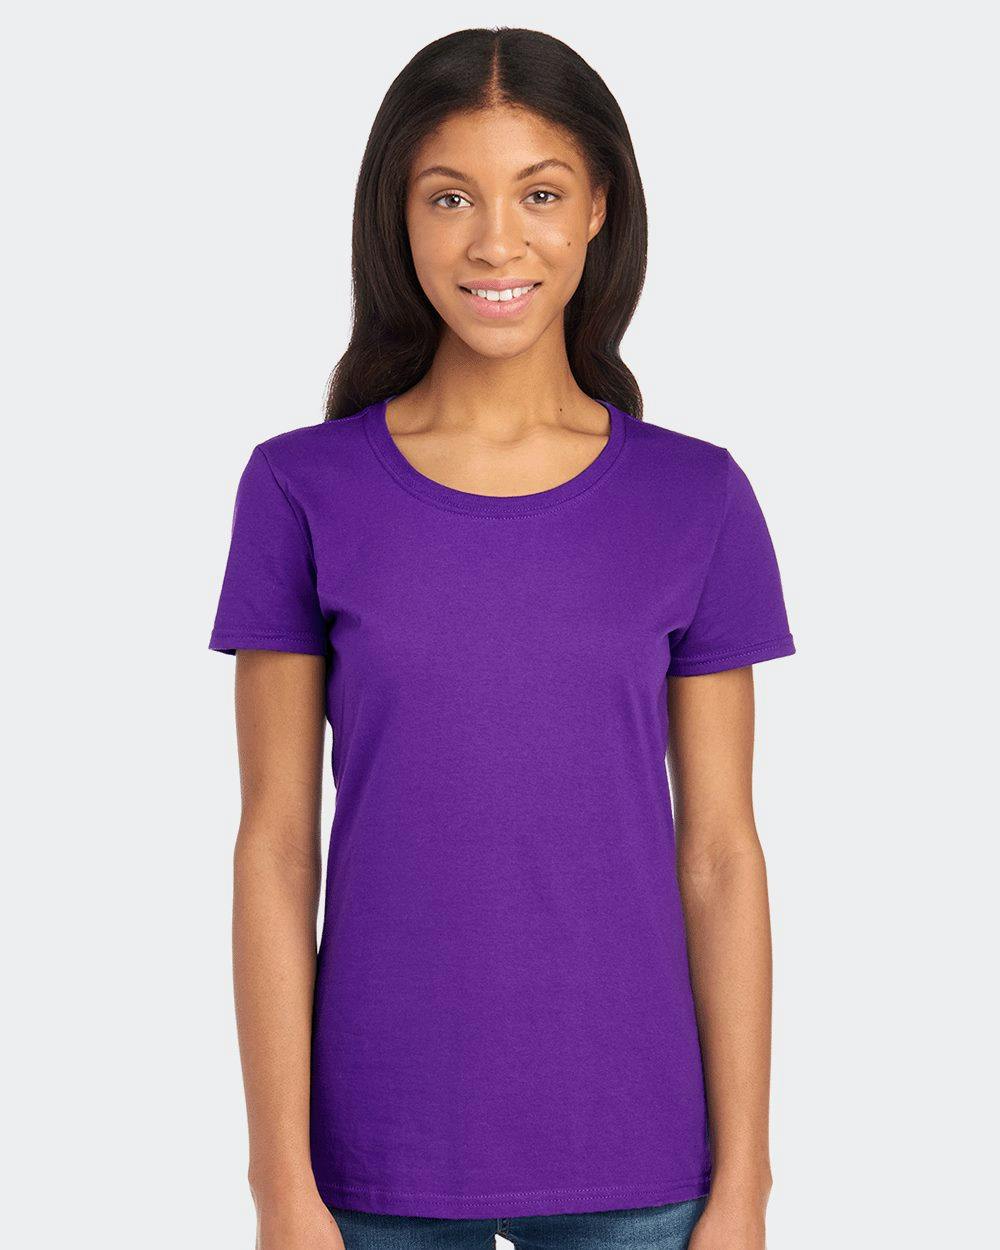 Image for HD Cotton Women's Short Sleeve T-Shirt - L3930R